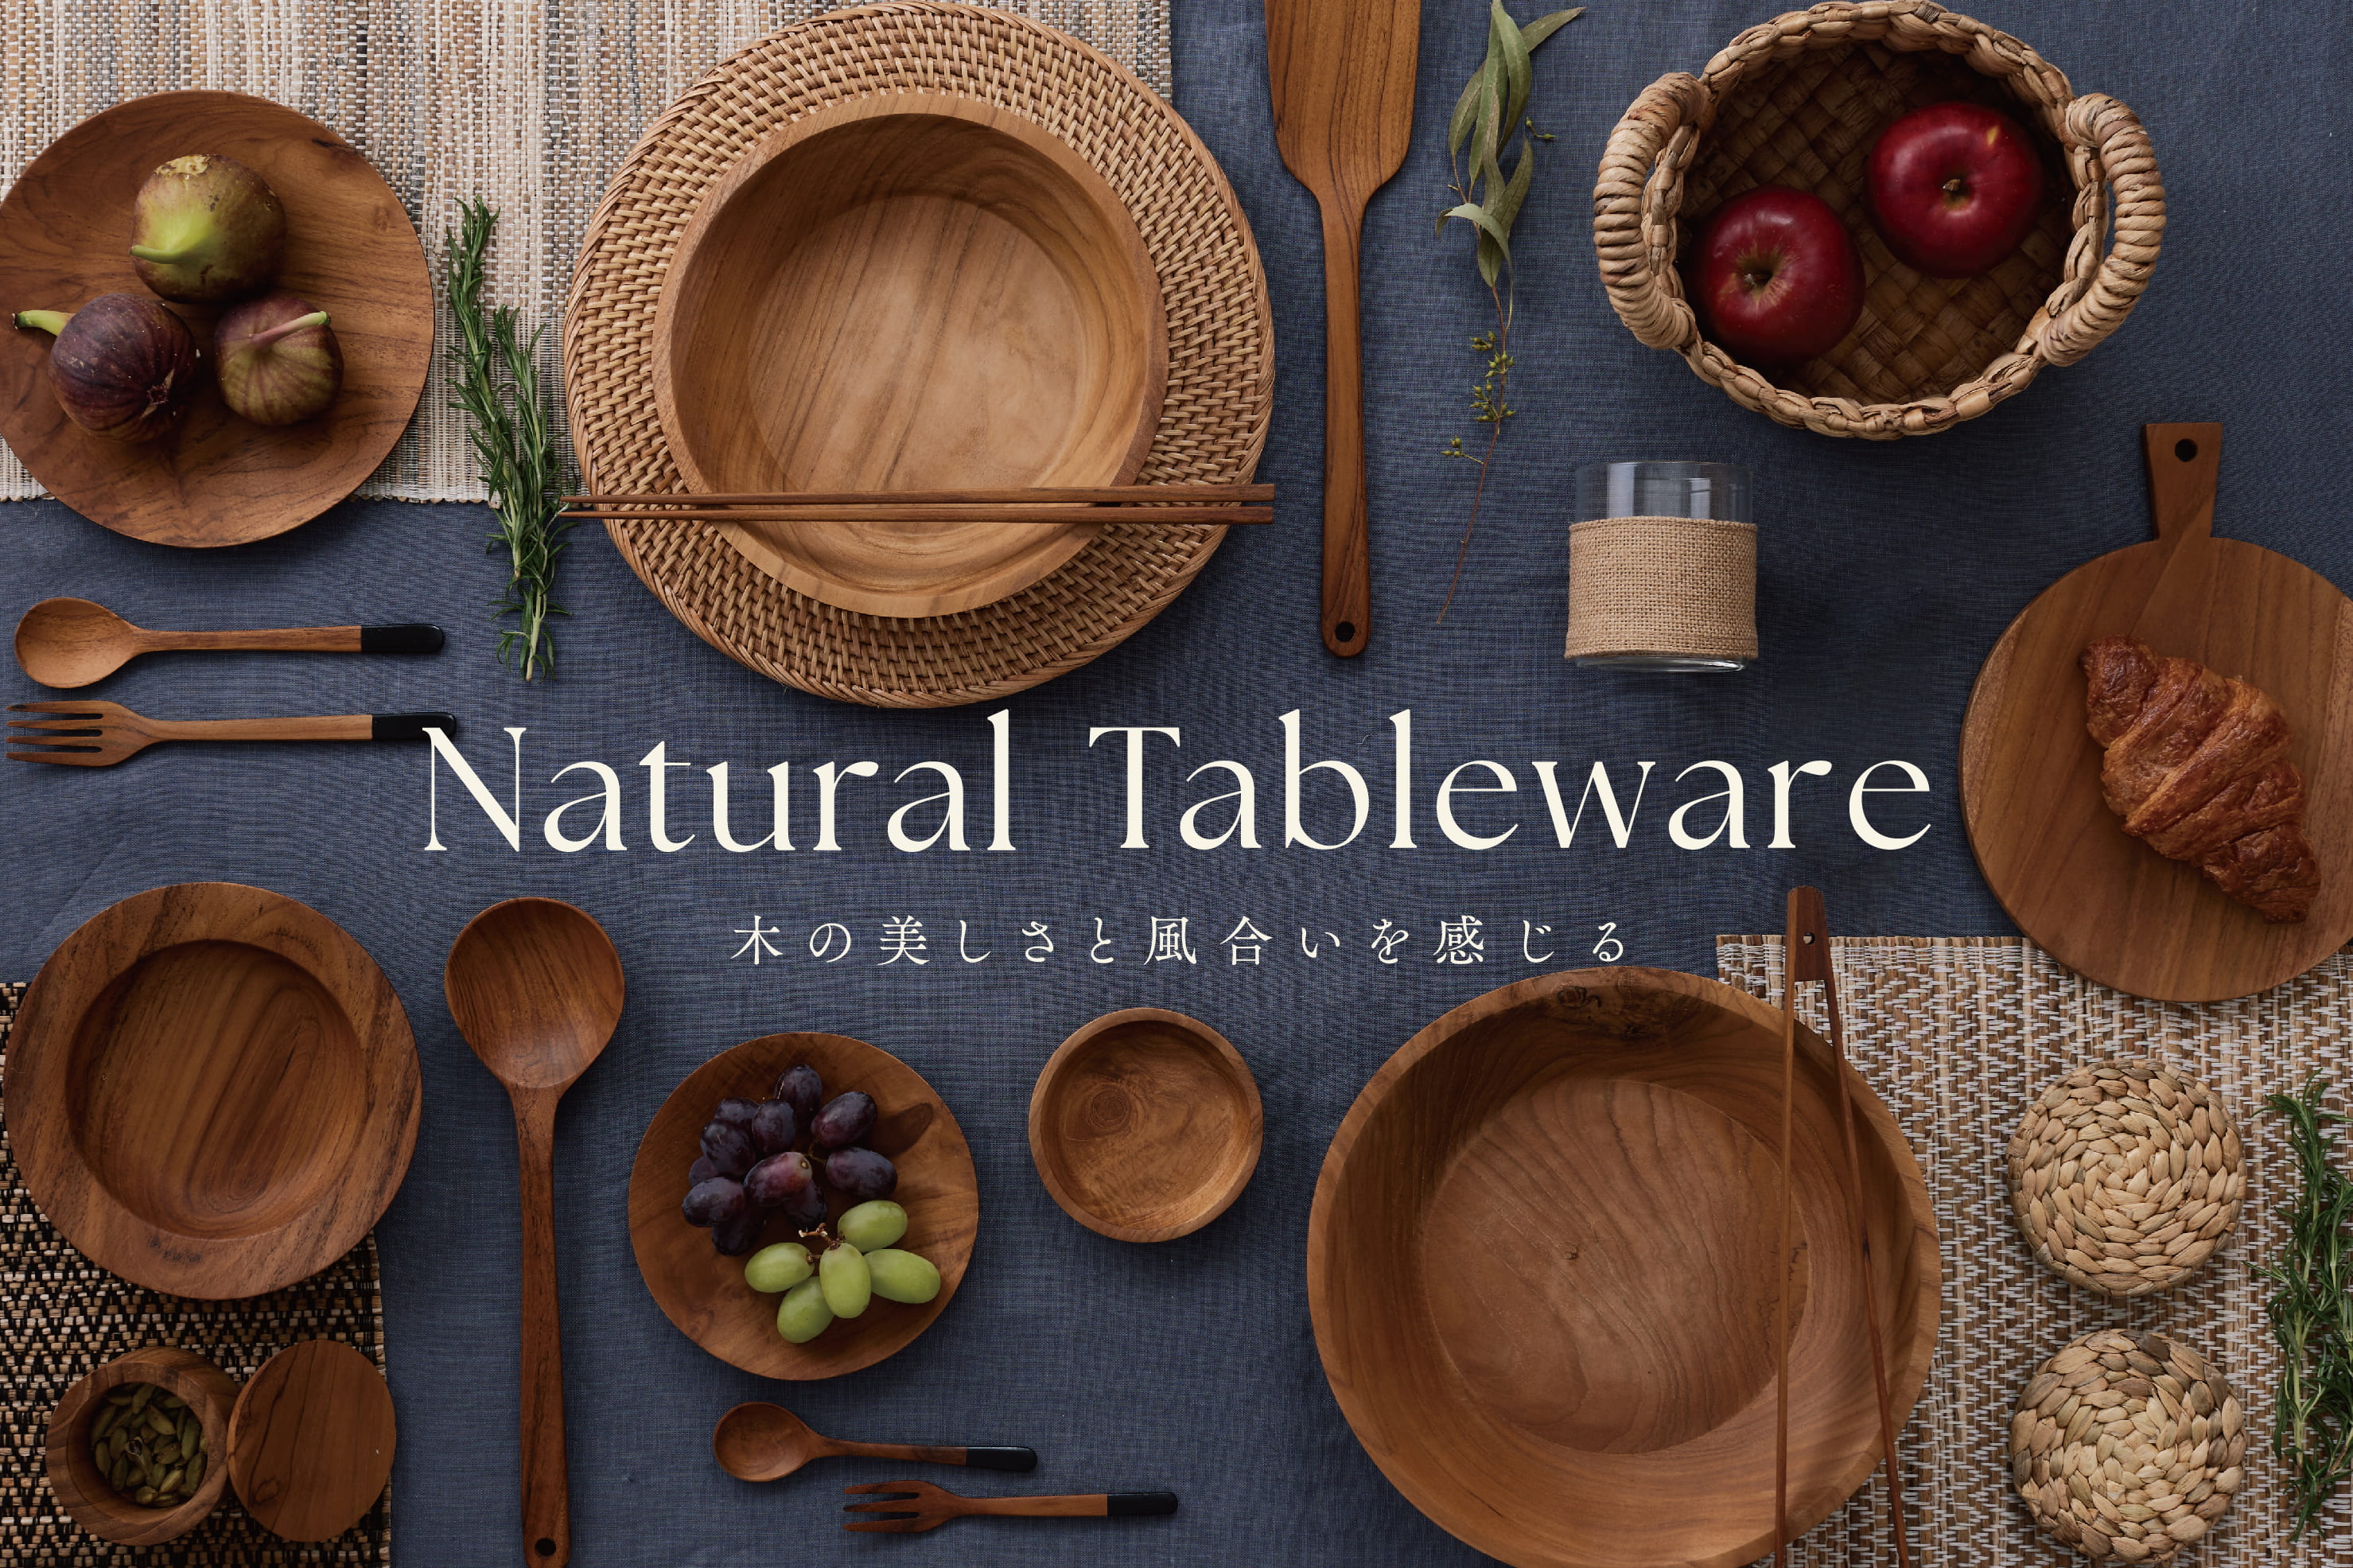 3COINS Natural Tableware